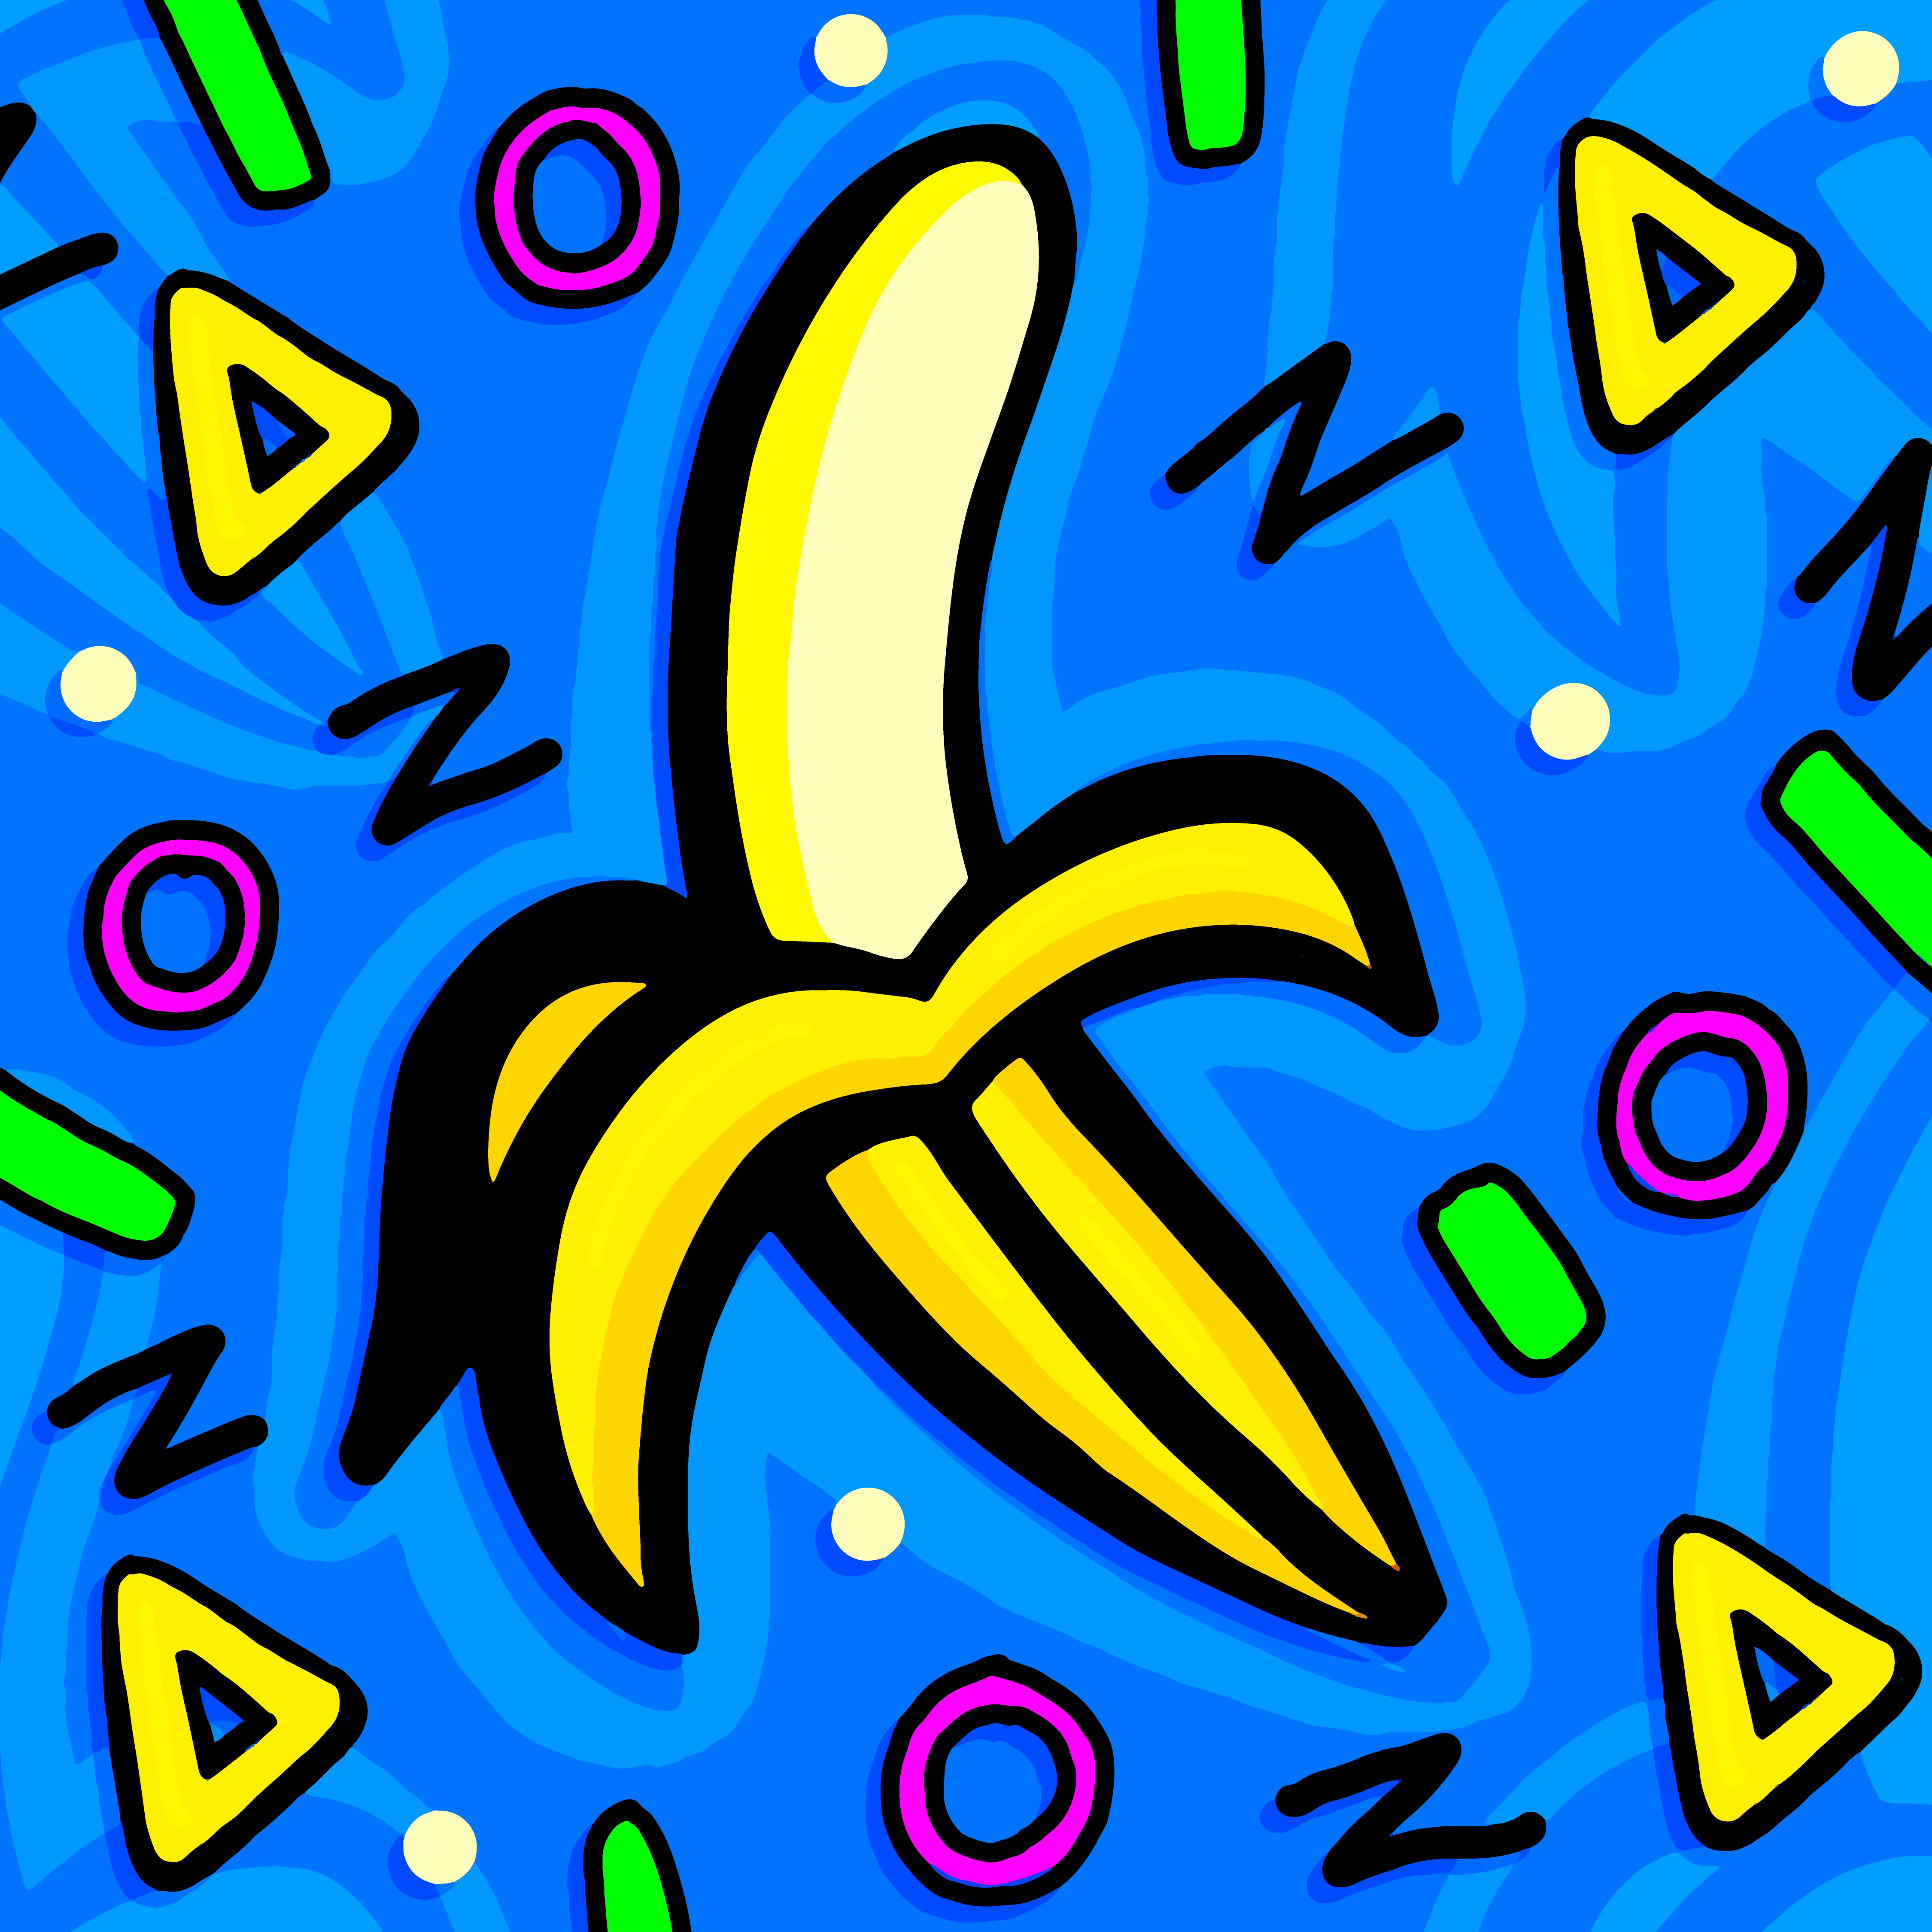 Banana illustration by Mina Tocalini